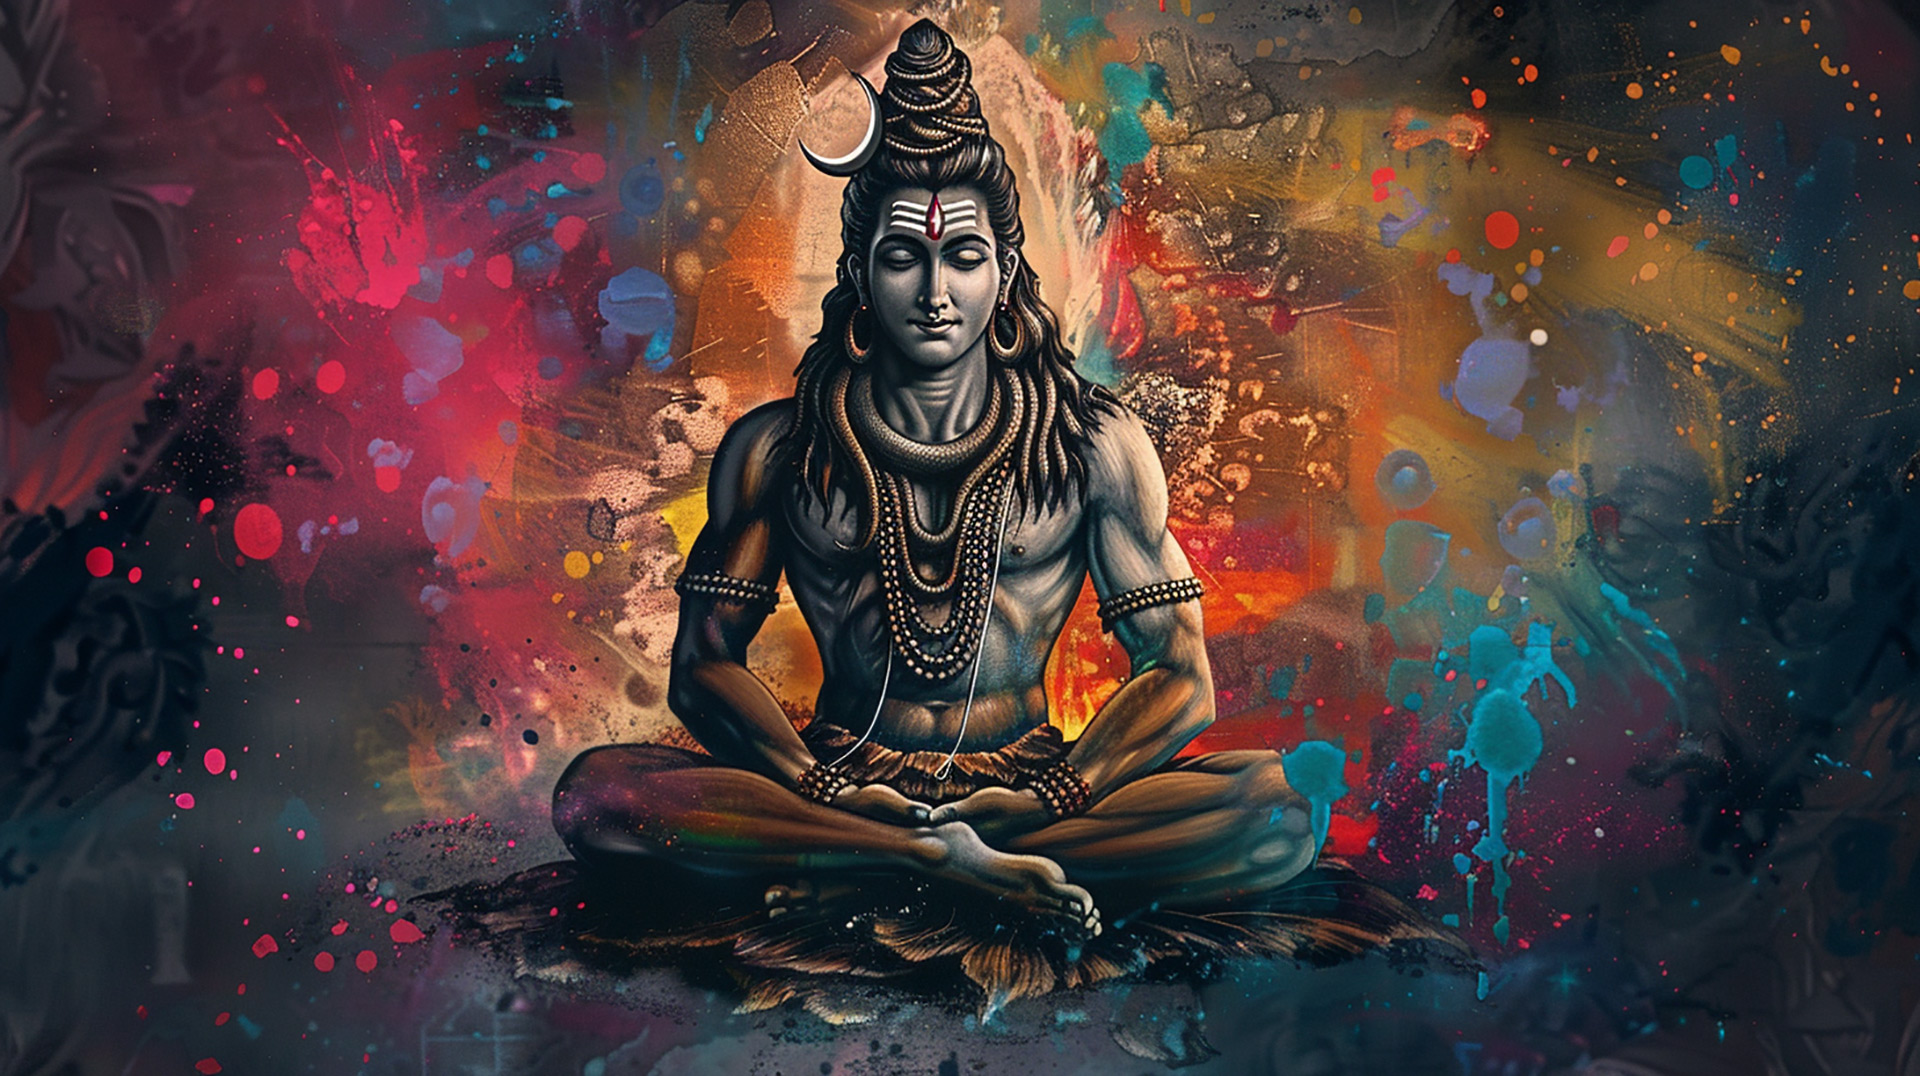 Shiva's Serenity: Digital Art Reflecting the Tranquil Meditative State of the Hindu God